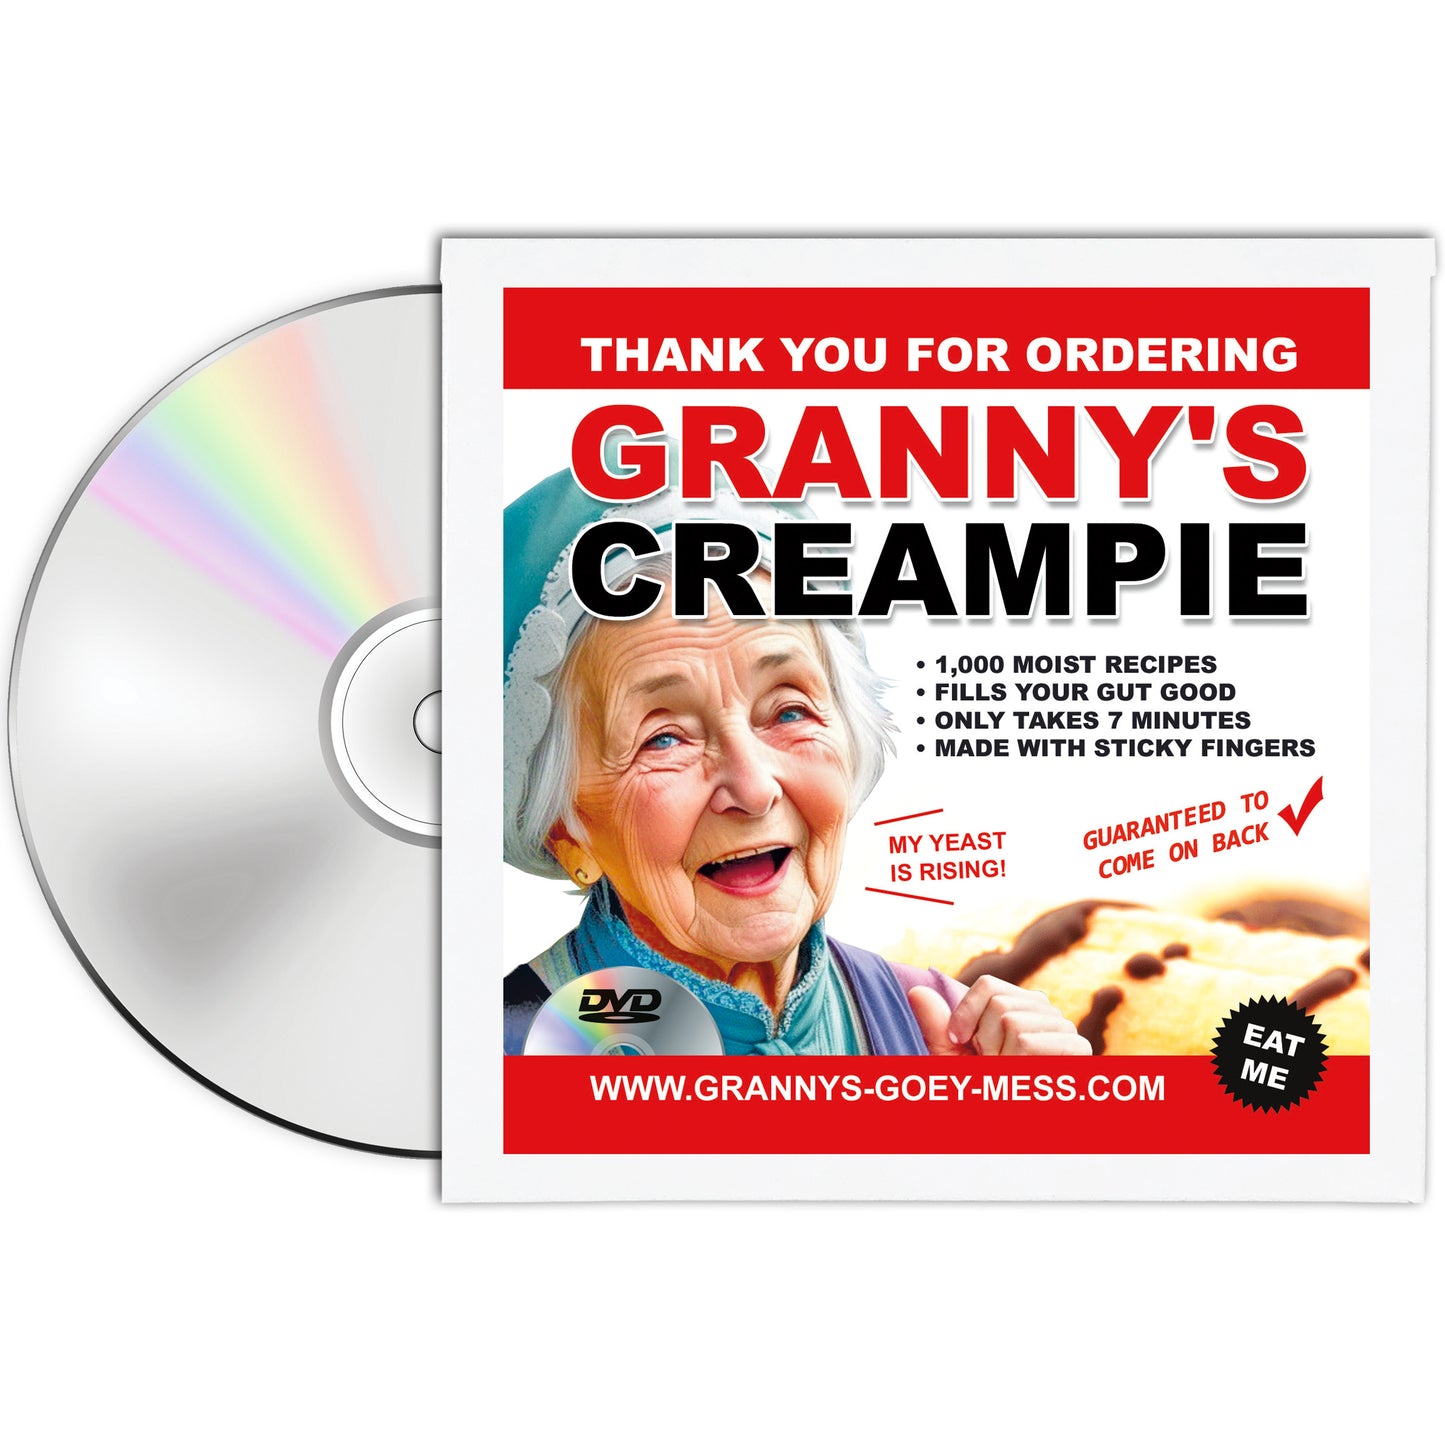 Grannys Creampie Fake DVD Prank